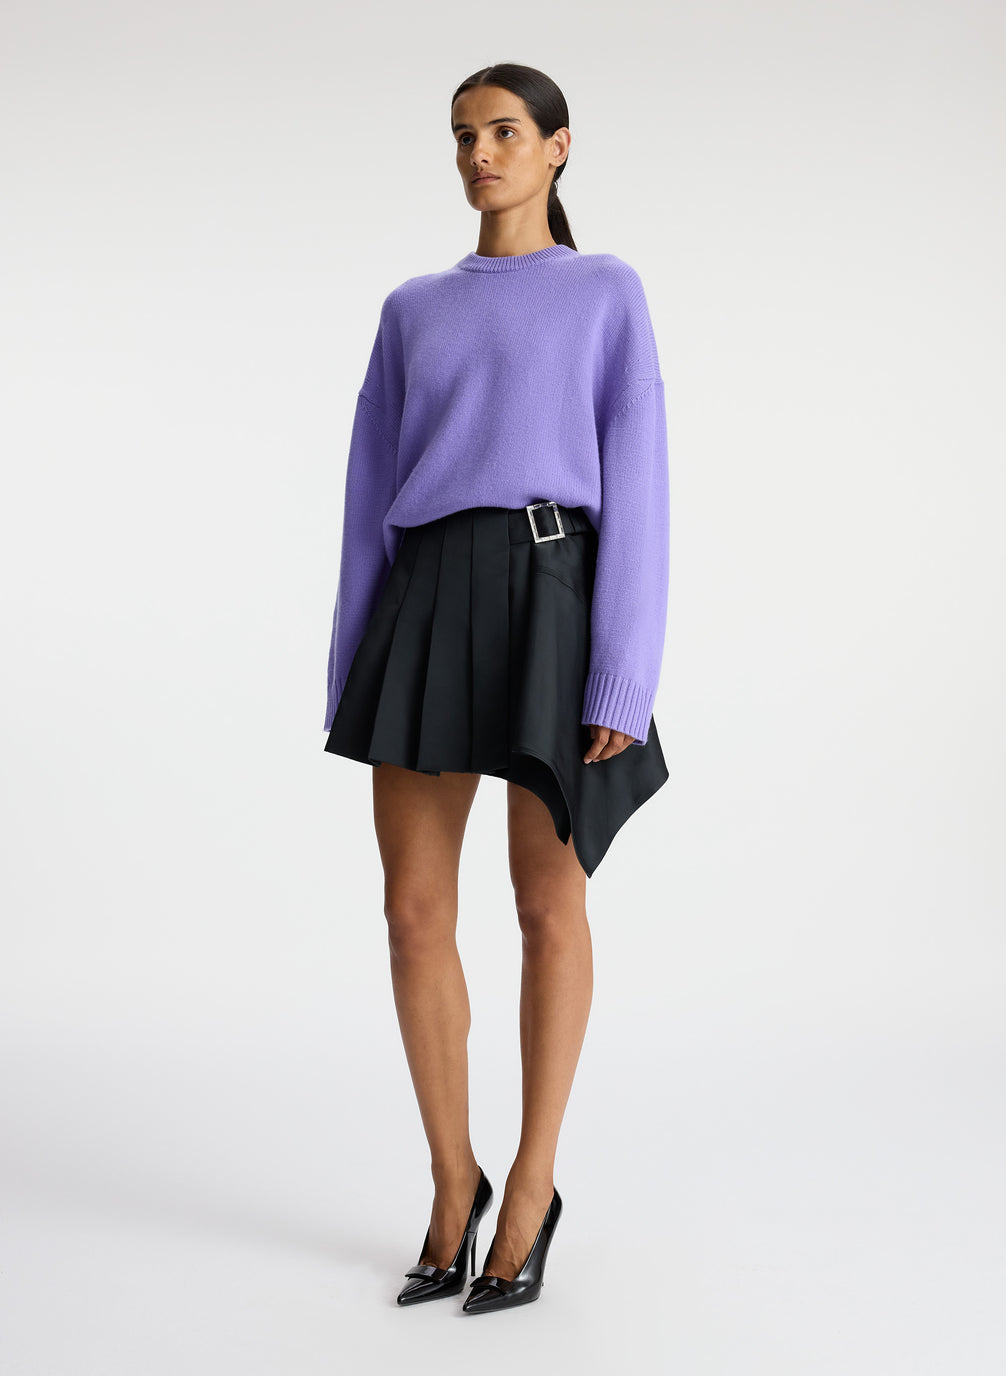 side view of woman wearing light purple cashmere long sleeve sweater